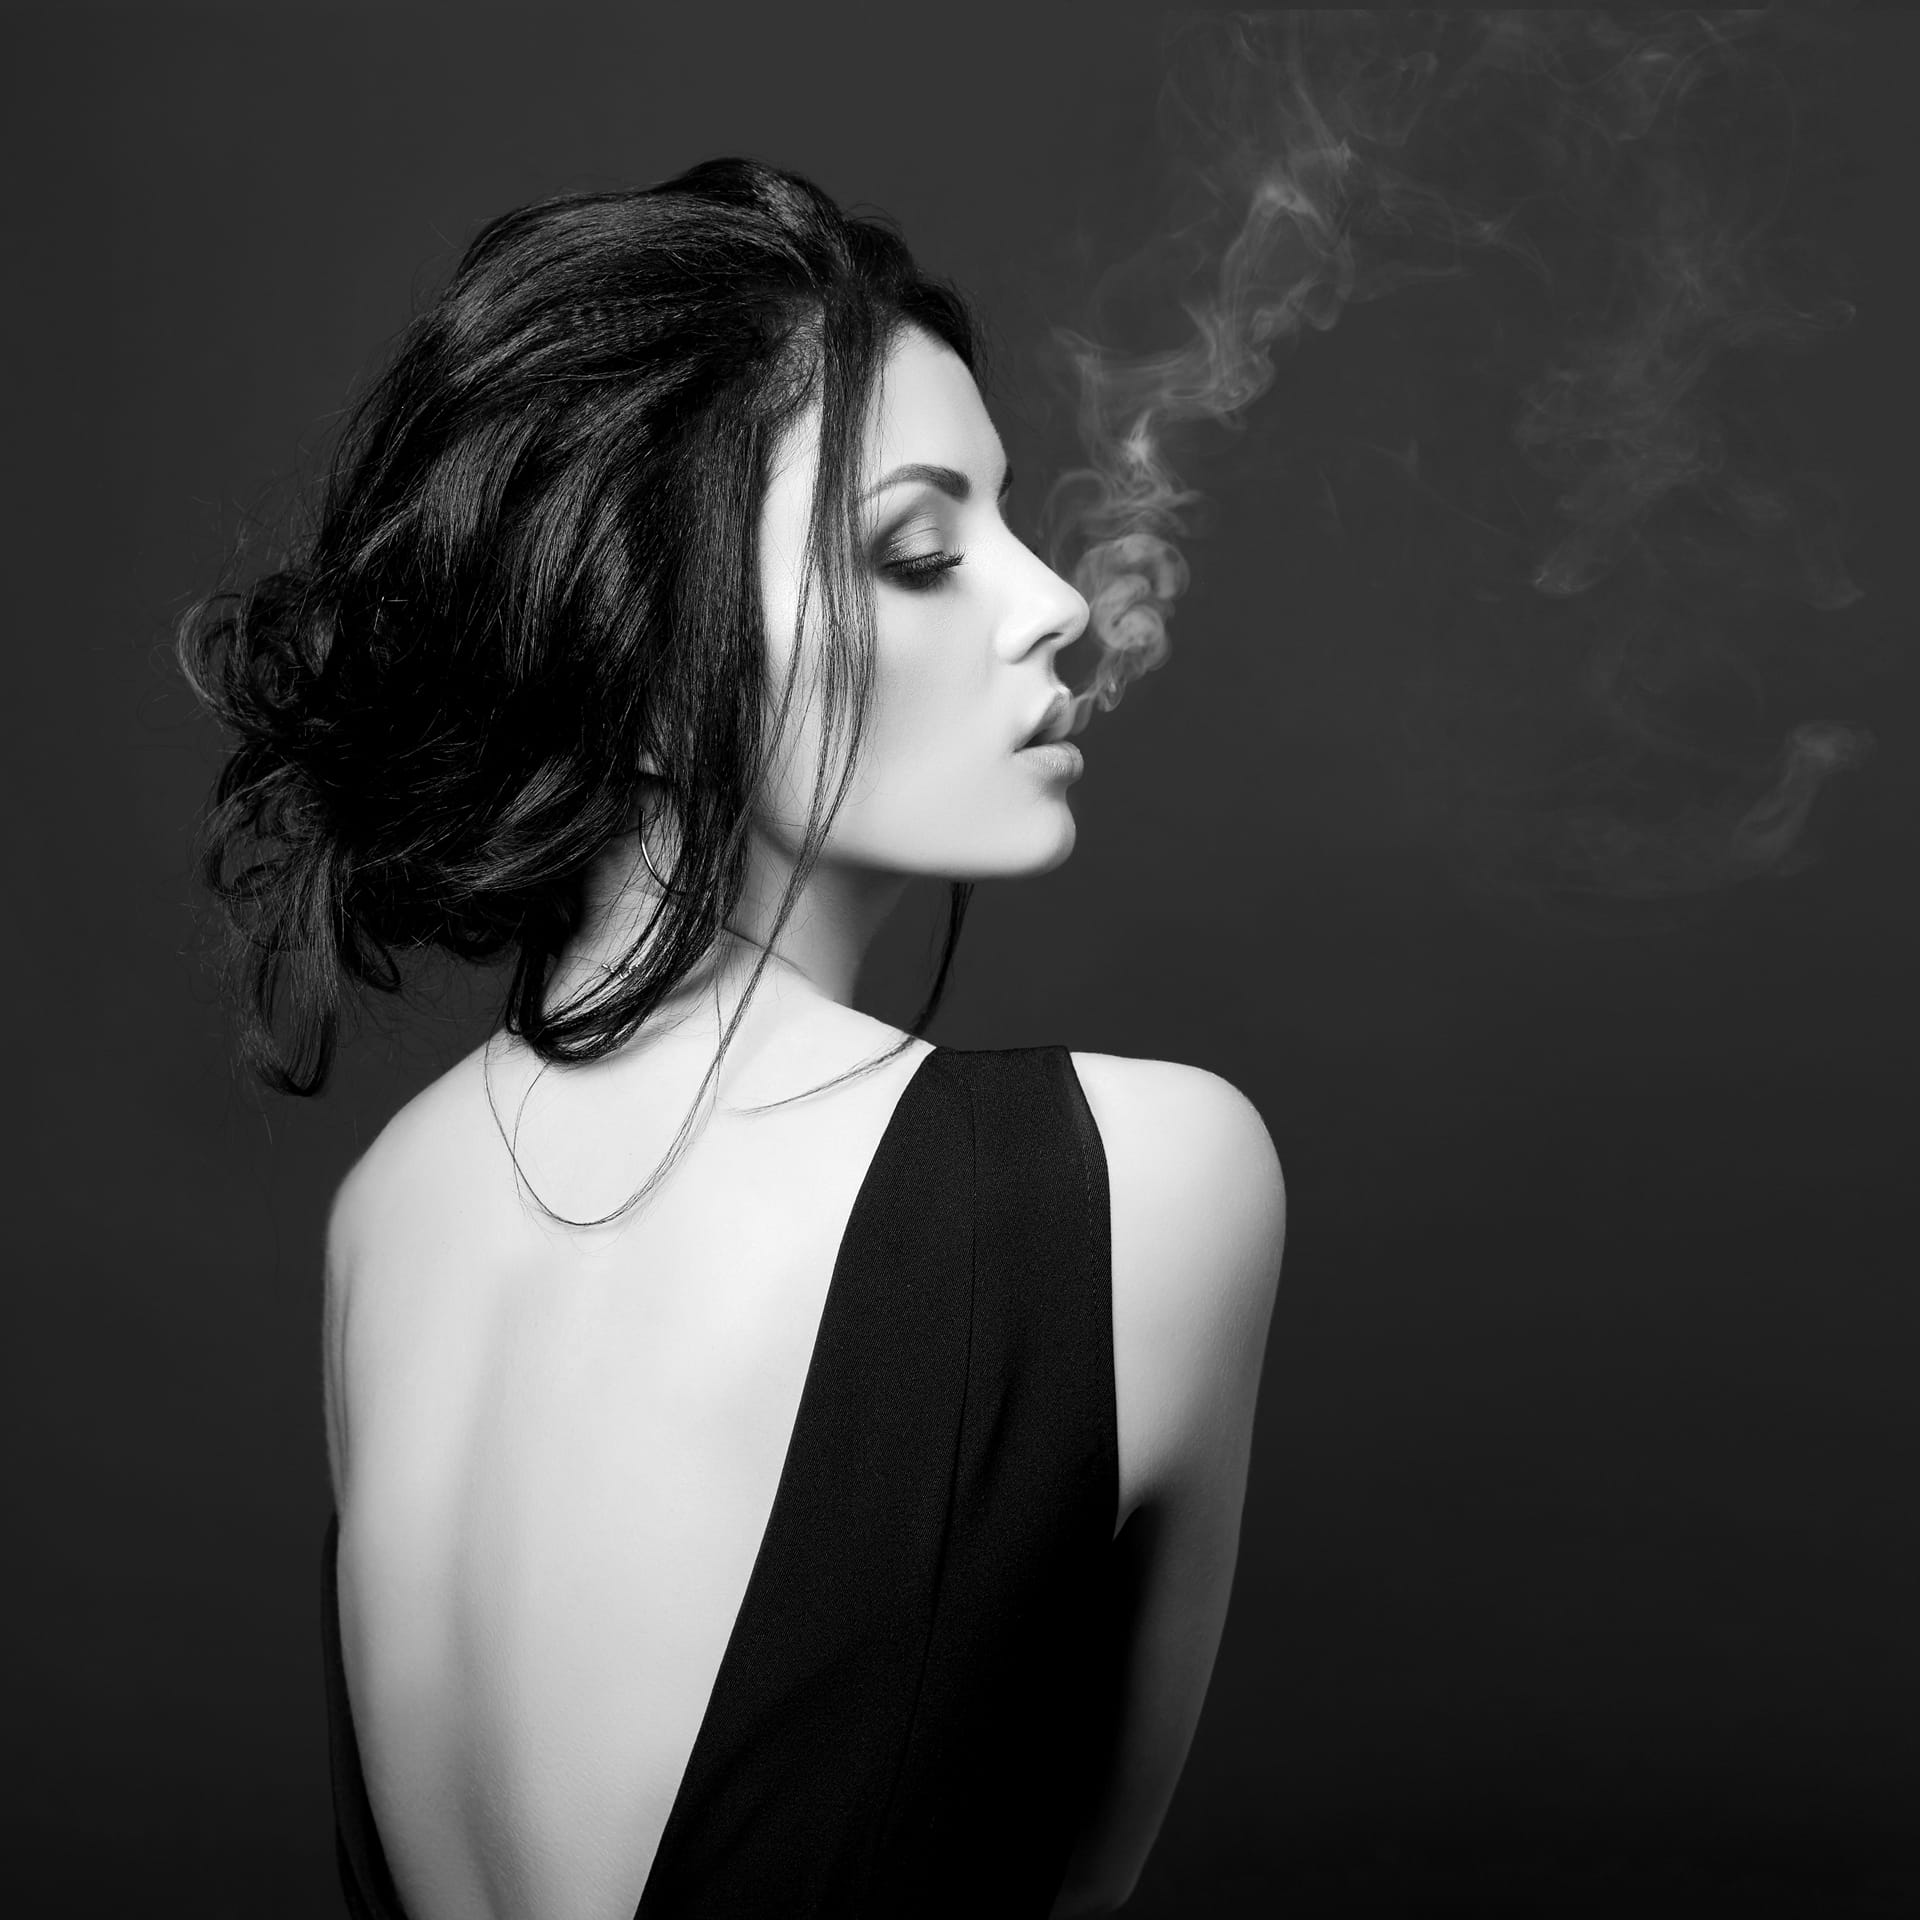 Brunette woman smoking dark background black dress classic portrait confident strong woman